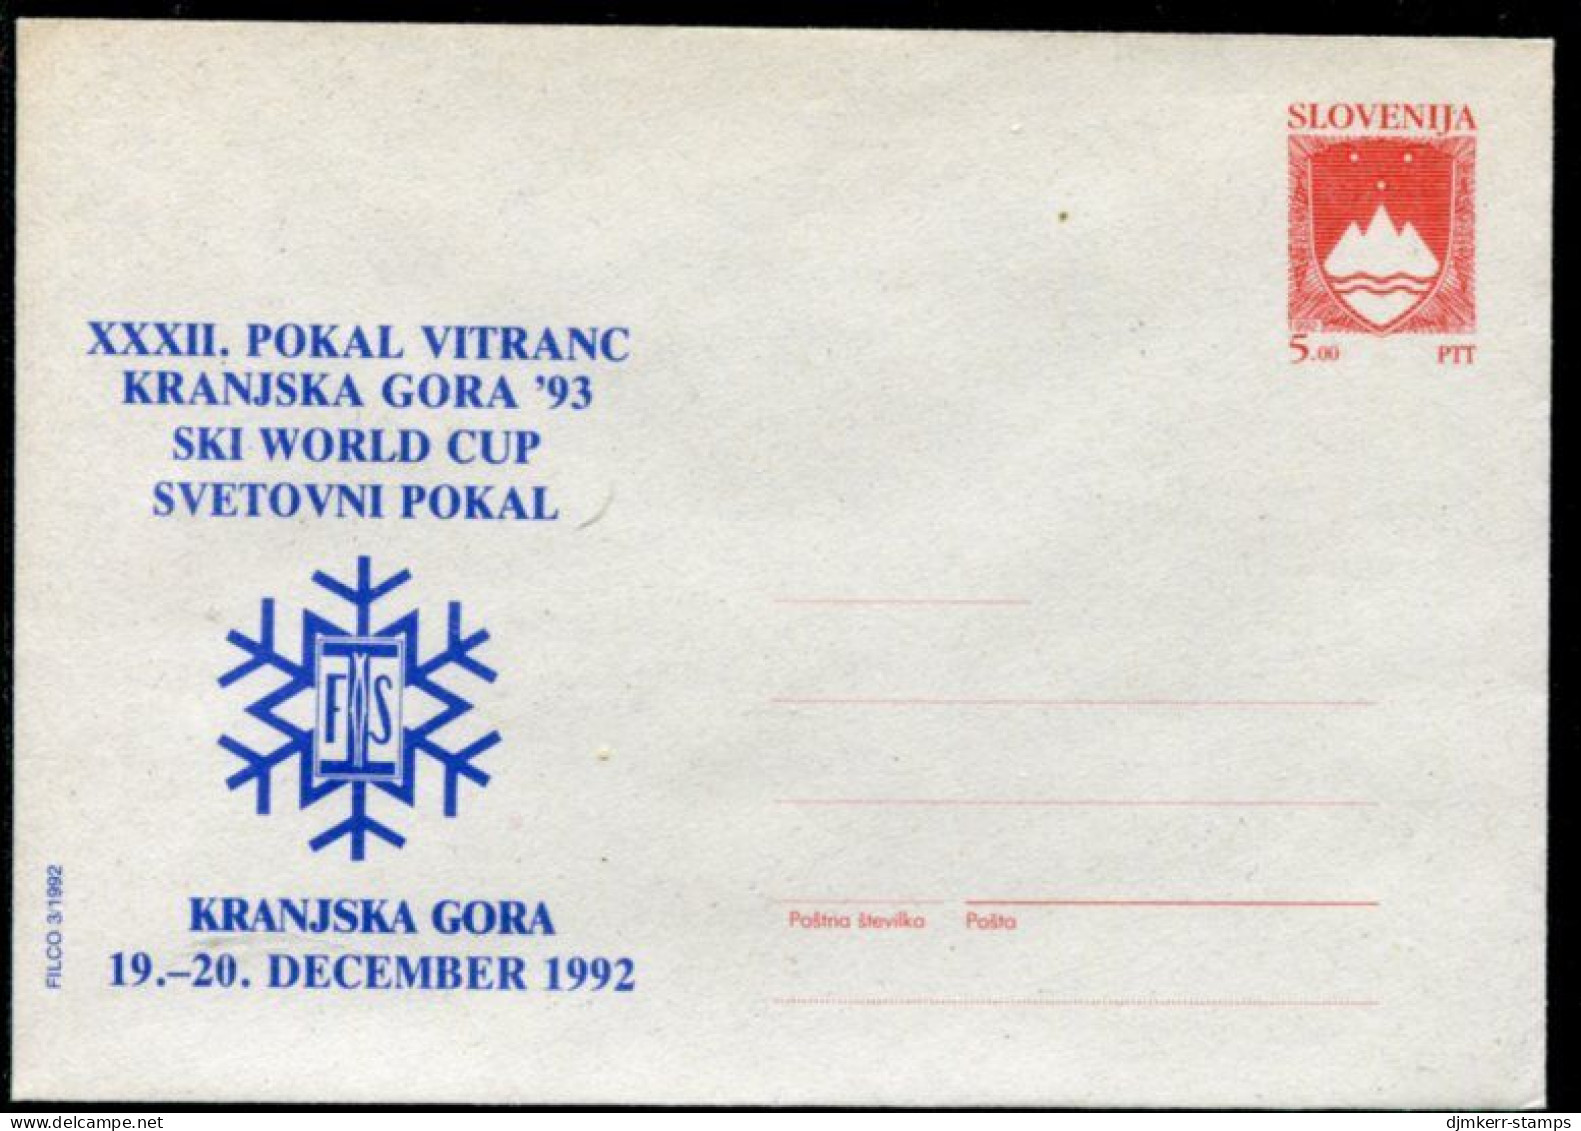 SLOVENIA 1992 5.00 T.  Arms Publicity Postal Stationery Envelope, Unused.  As Michel U1b - Slovenia